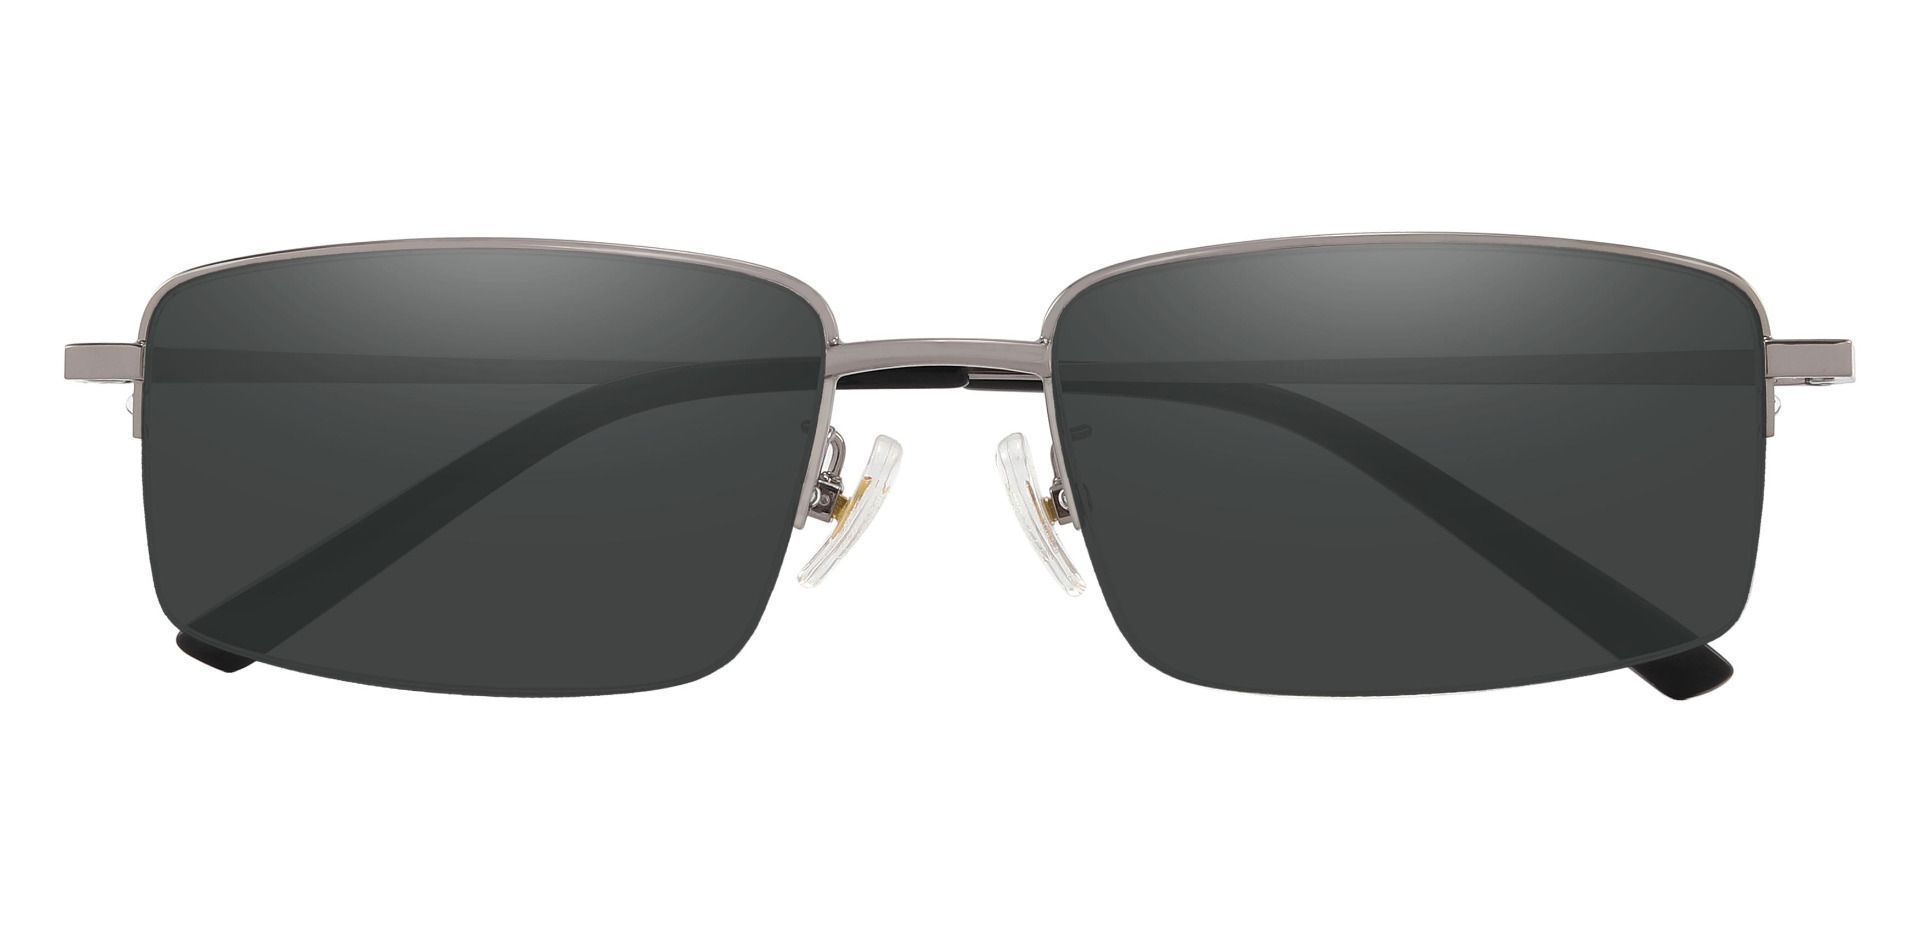 Wayne Rectangle Non-Rx Sunglasses - Gray Frame With Gray Lenses